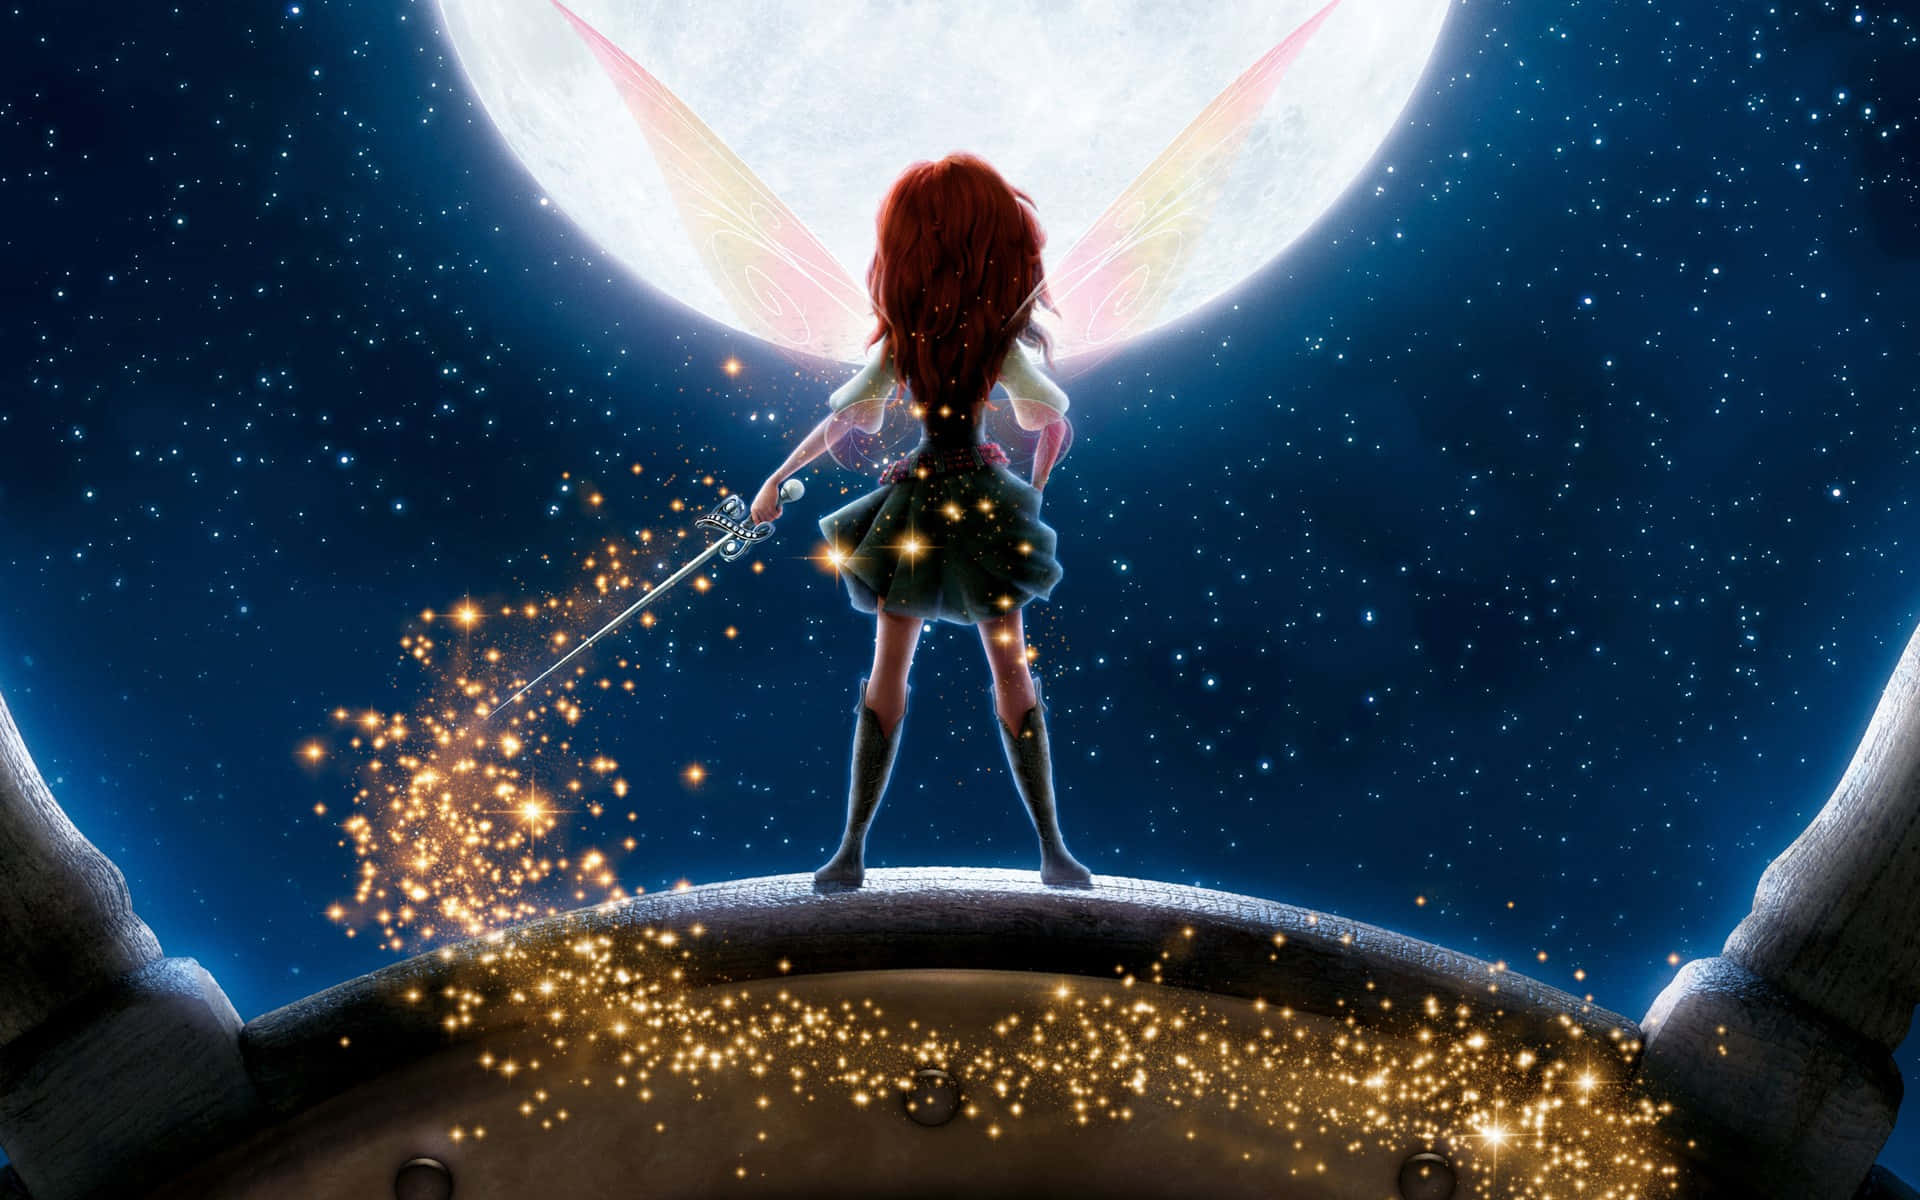 "Glowing in the Night Sky, the Magic Moon" Wallpaper